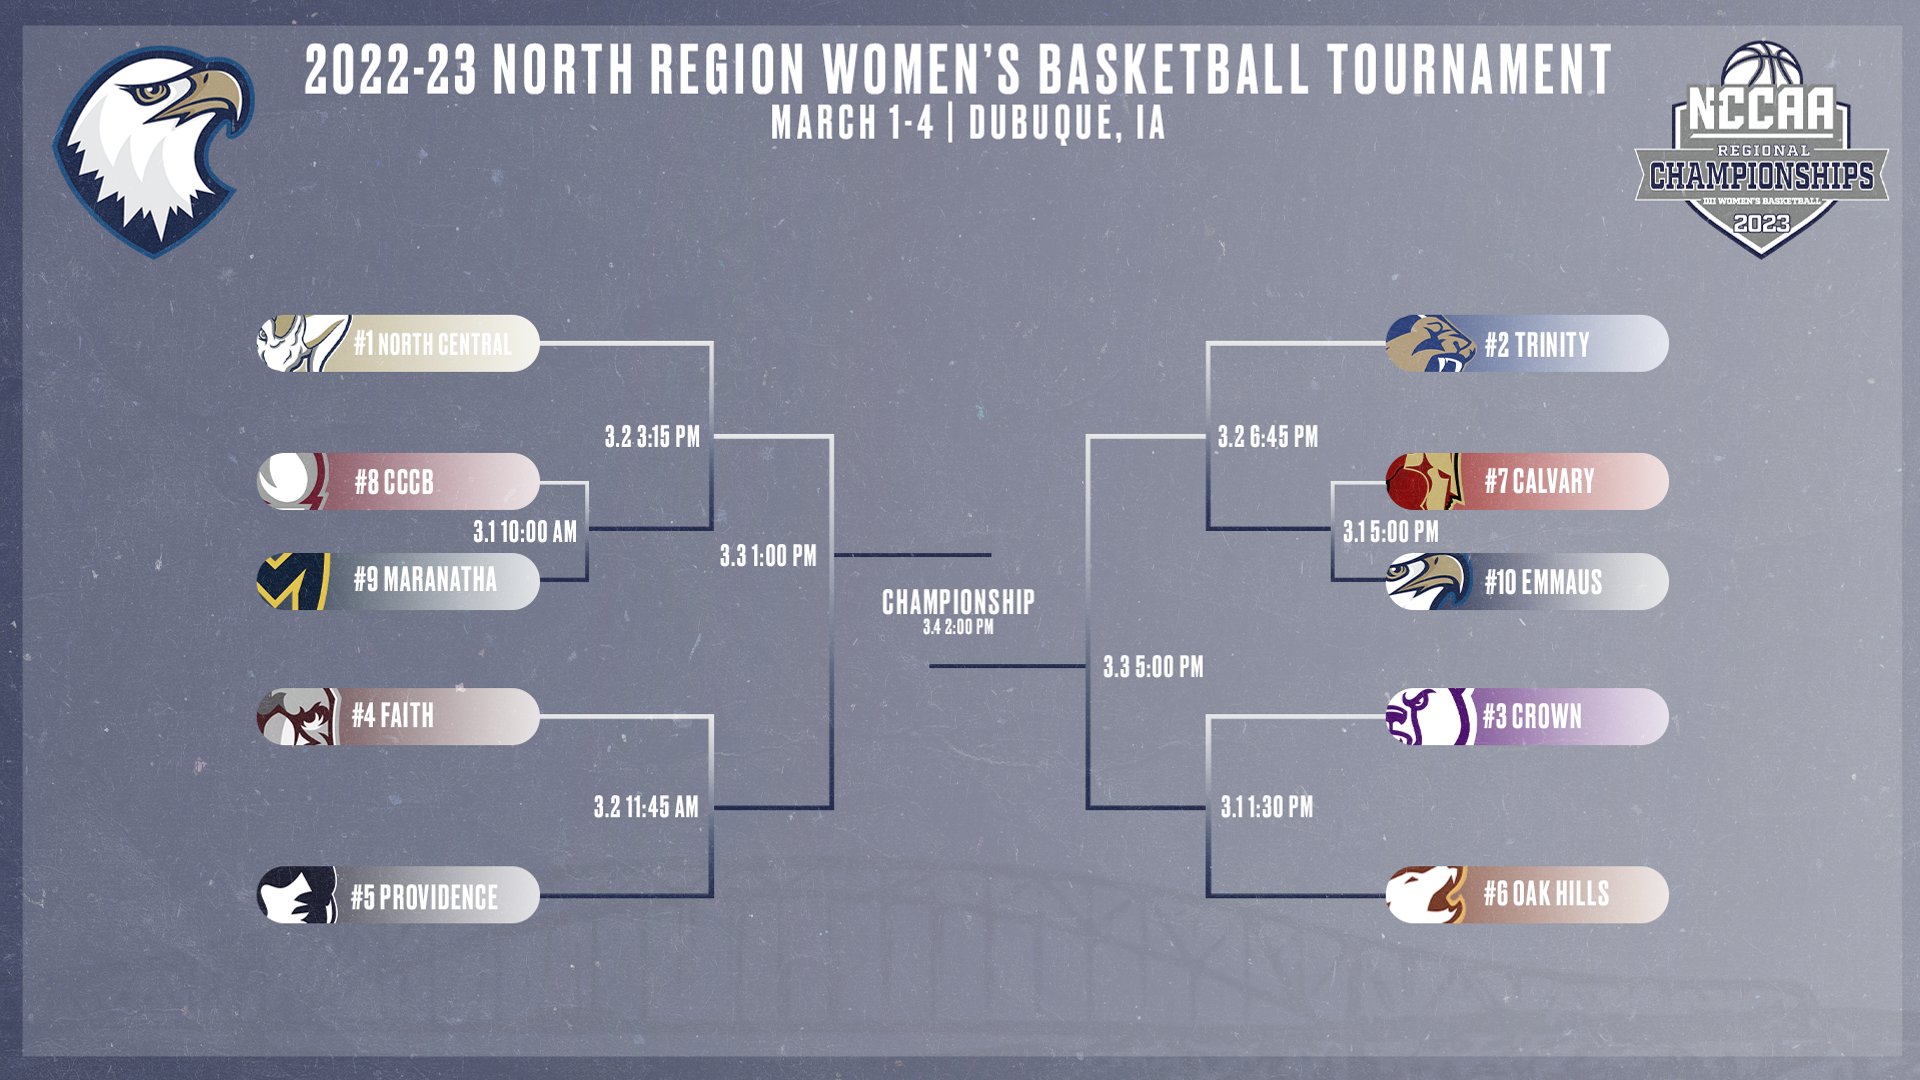 2022-23 North Region Women's Basketball Tournament